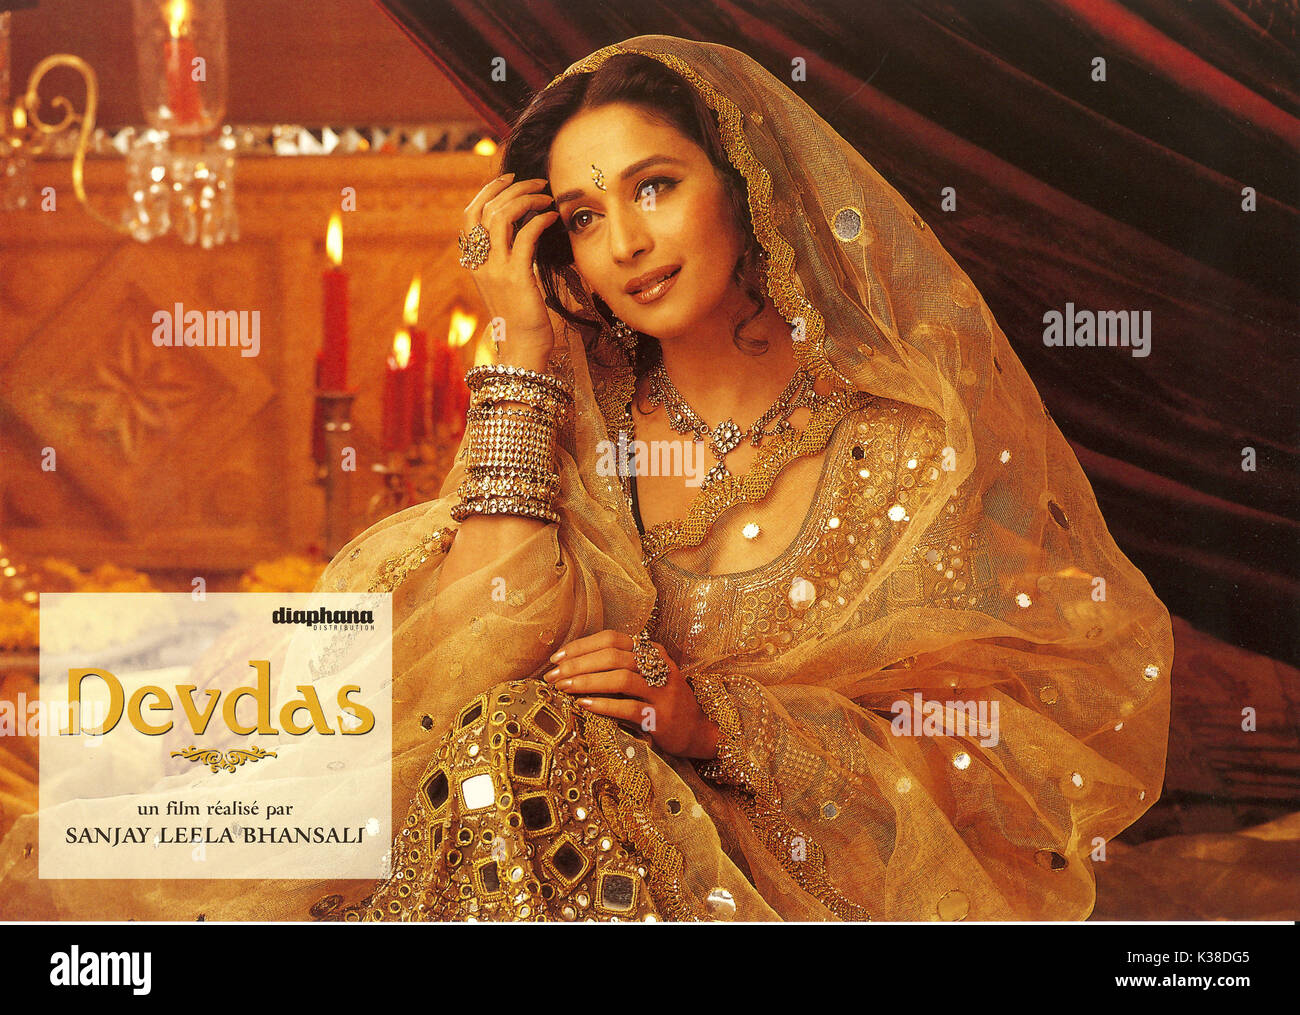 DEVDAS [INDIAN/2002] MADHURI DIXIT as 'Chandramuhki' DIRECTOR: SANJAY LEELA BHANSALI SUBJECT: BOLLYWOOD, INDIAN FILM     Date: 2002 Stock Photo